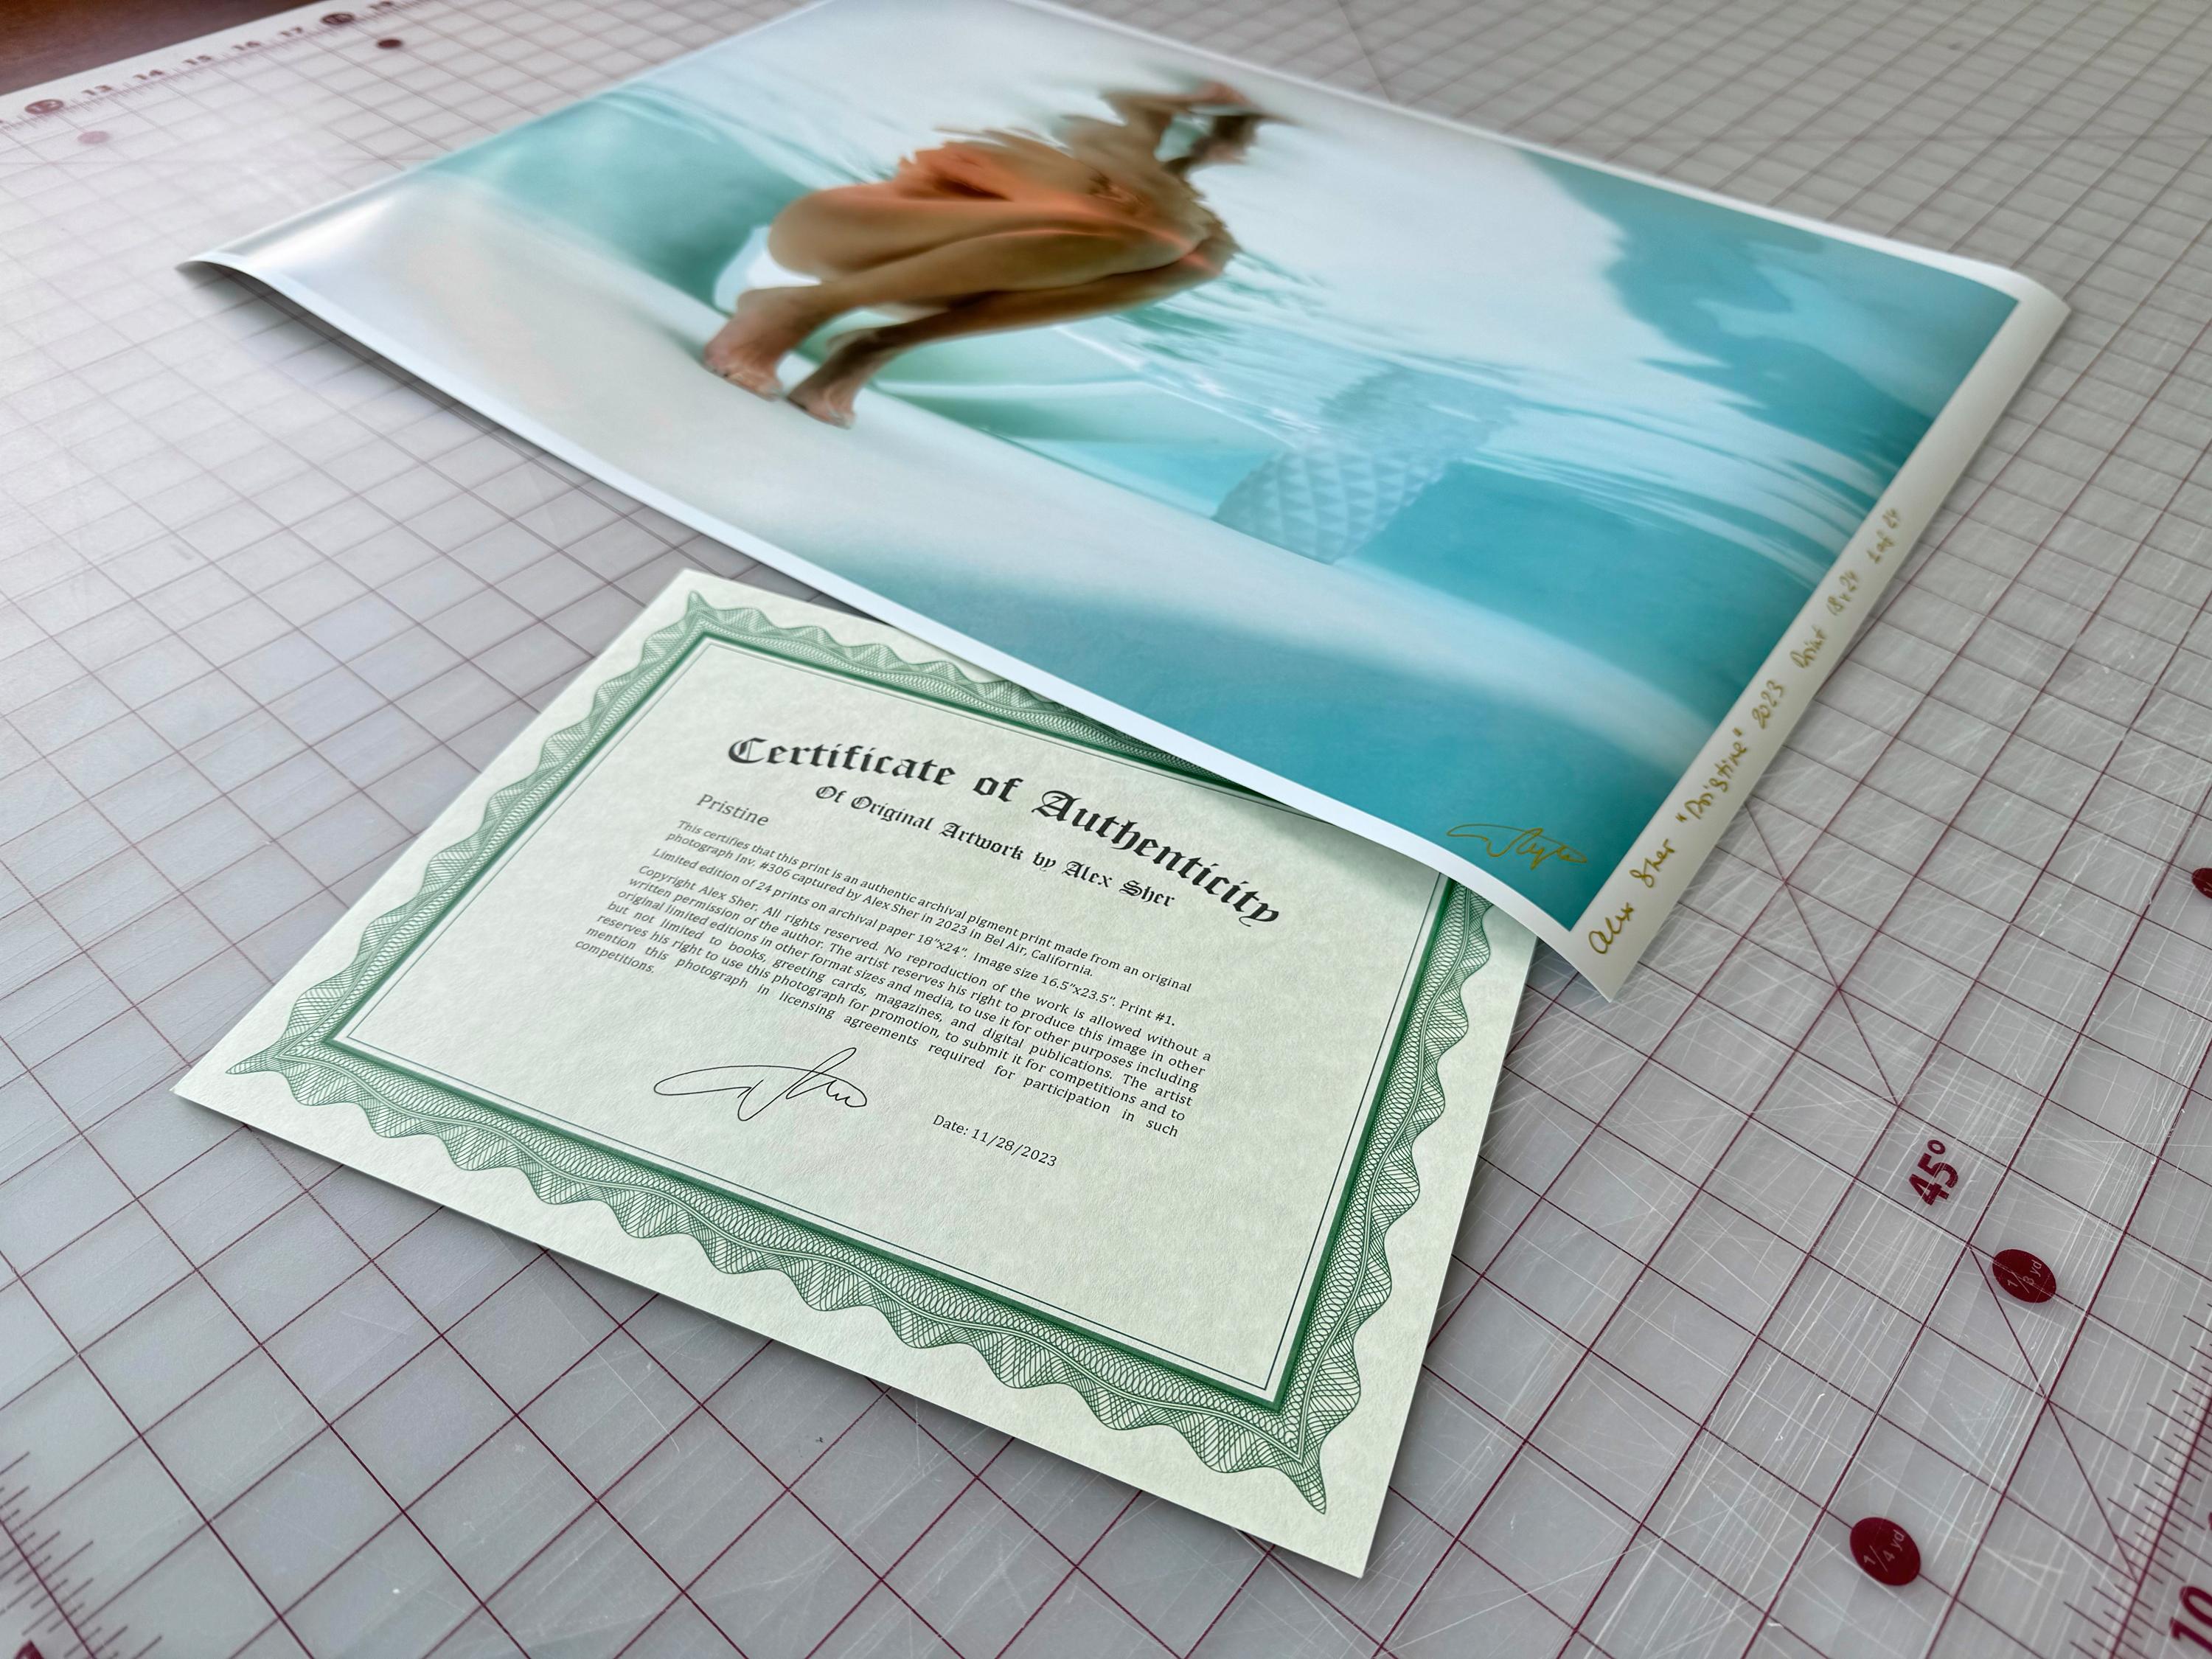 Pristine - underwater nude photograph - archival pigment print 16